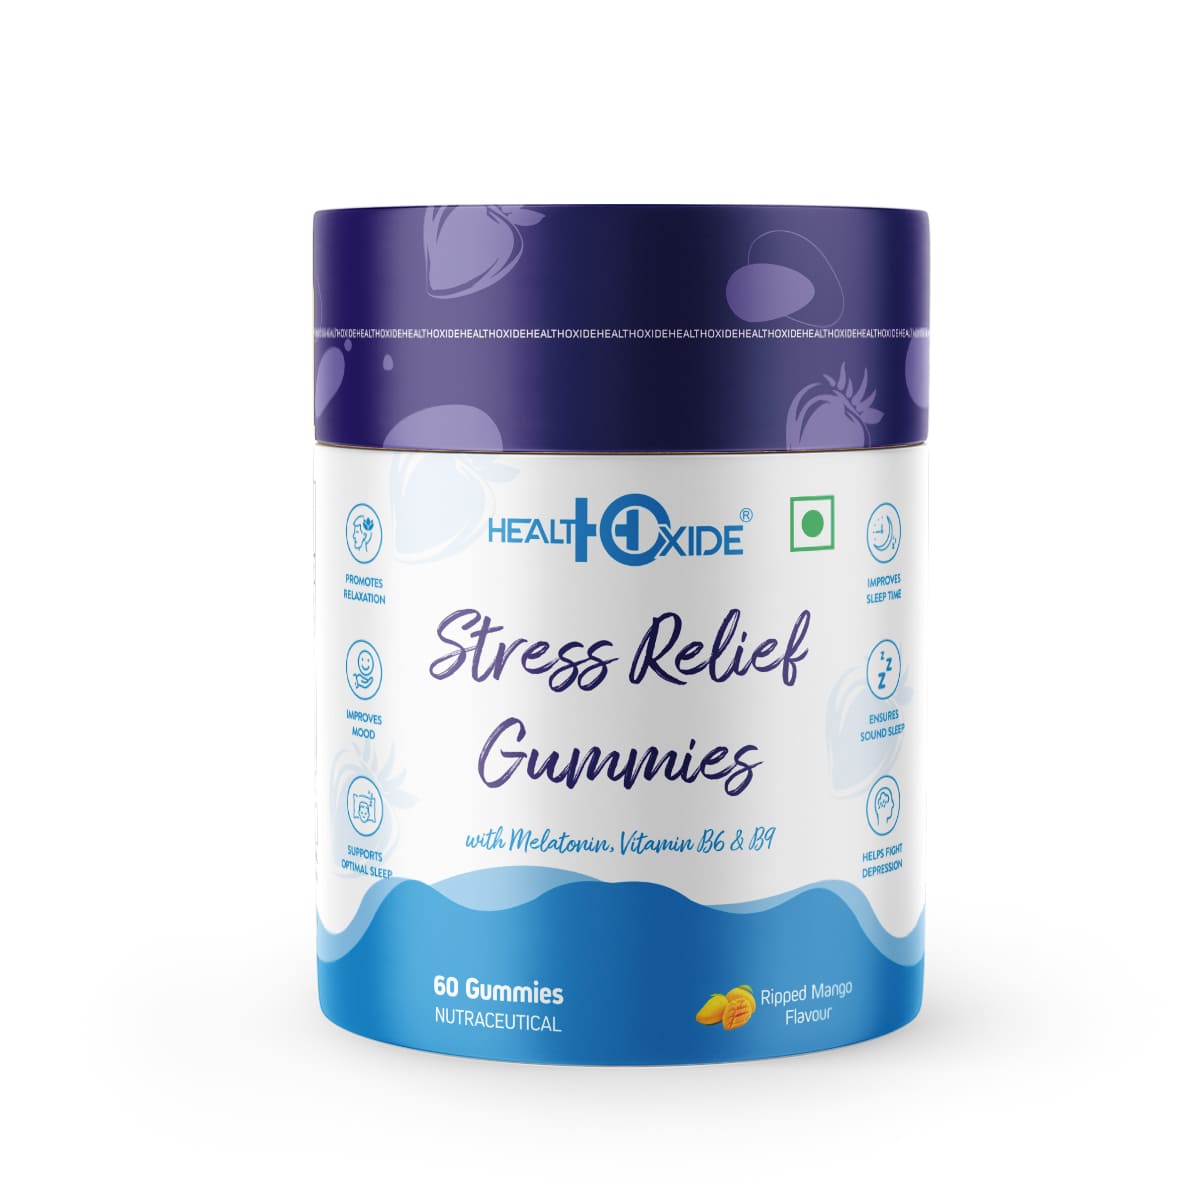 Healthoxide stress relief gummies, Sleep gummies, Melatonin, vitamin B6, B9 Ripped mango flavoured, 60 Gummies